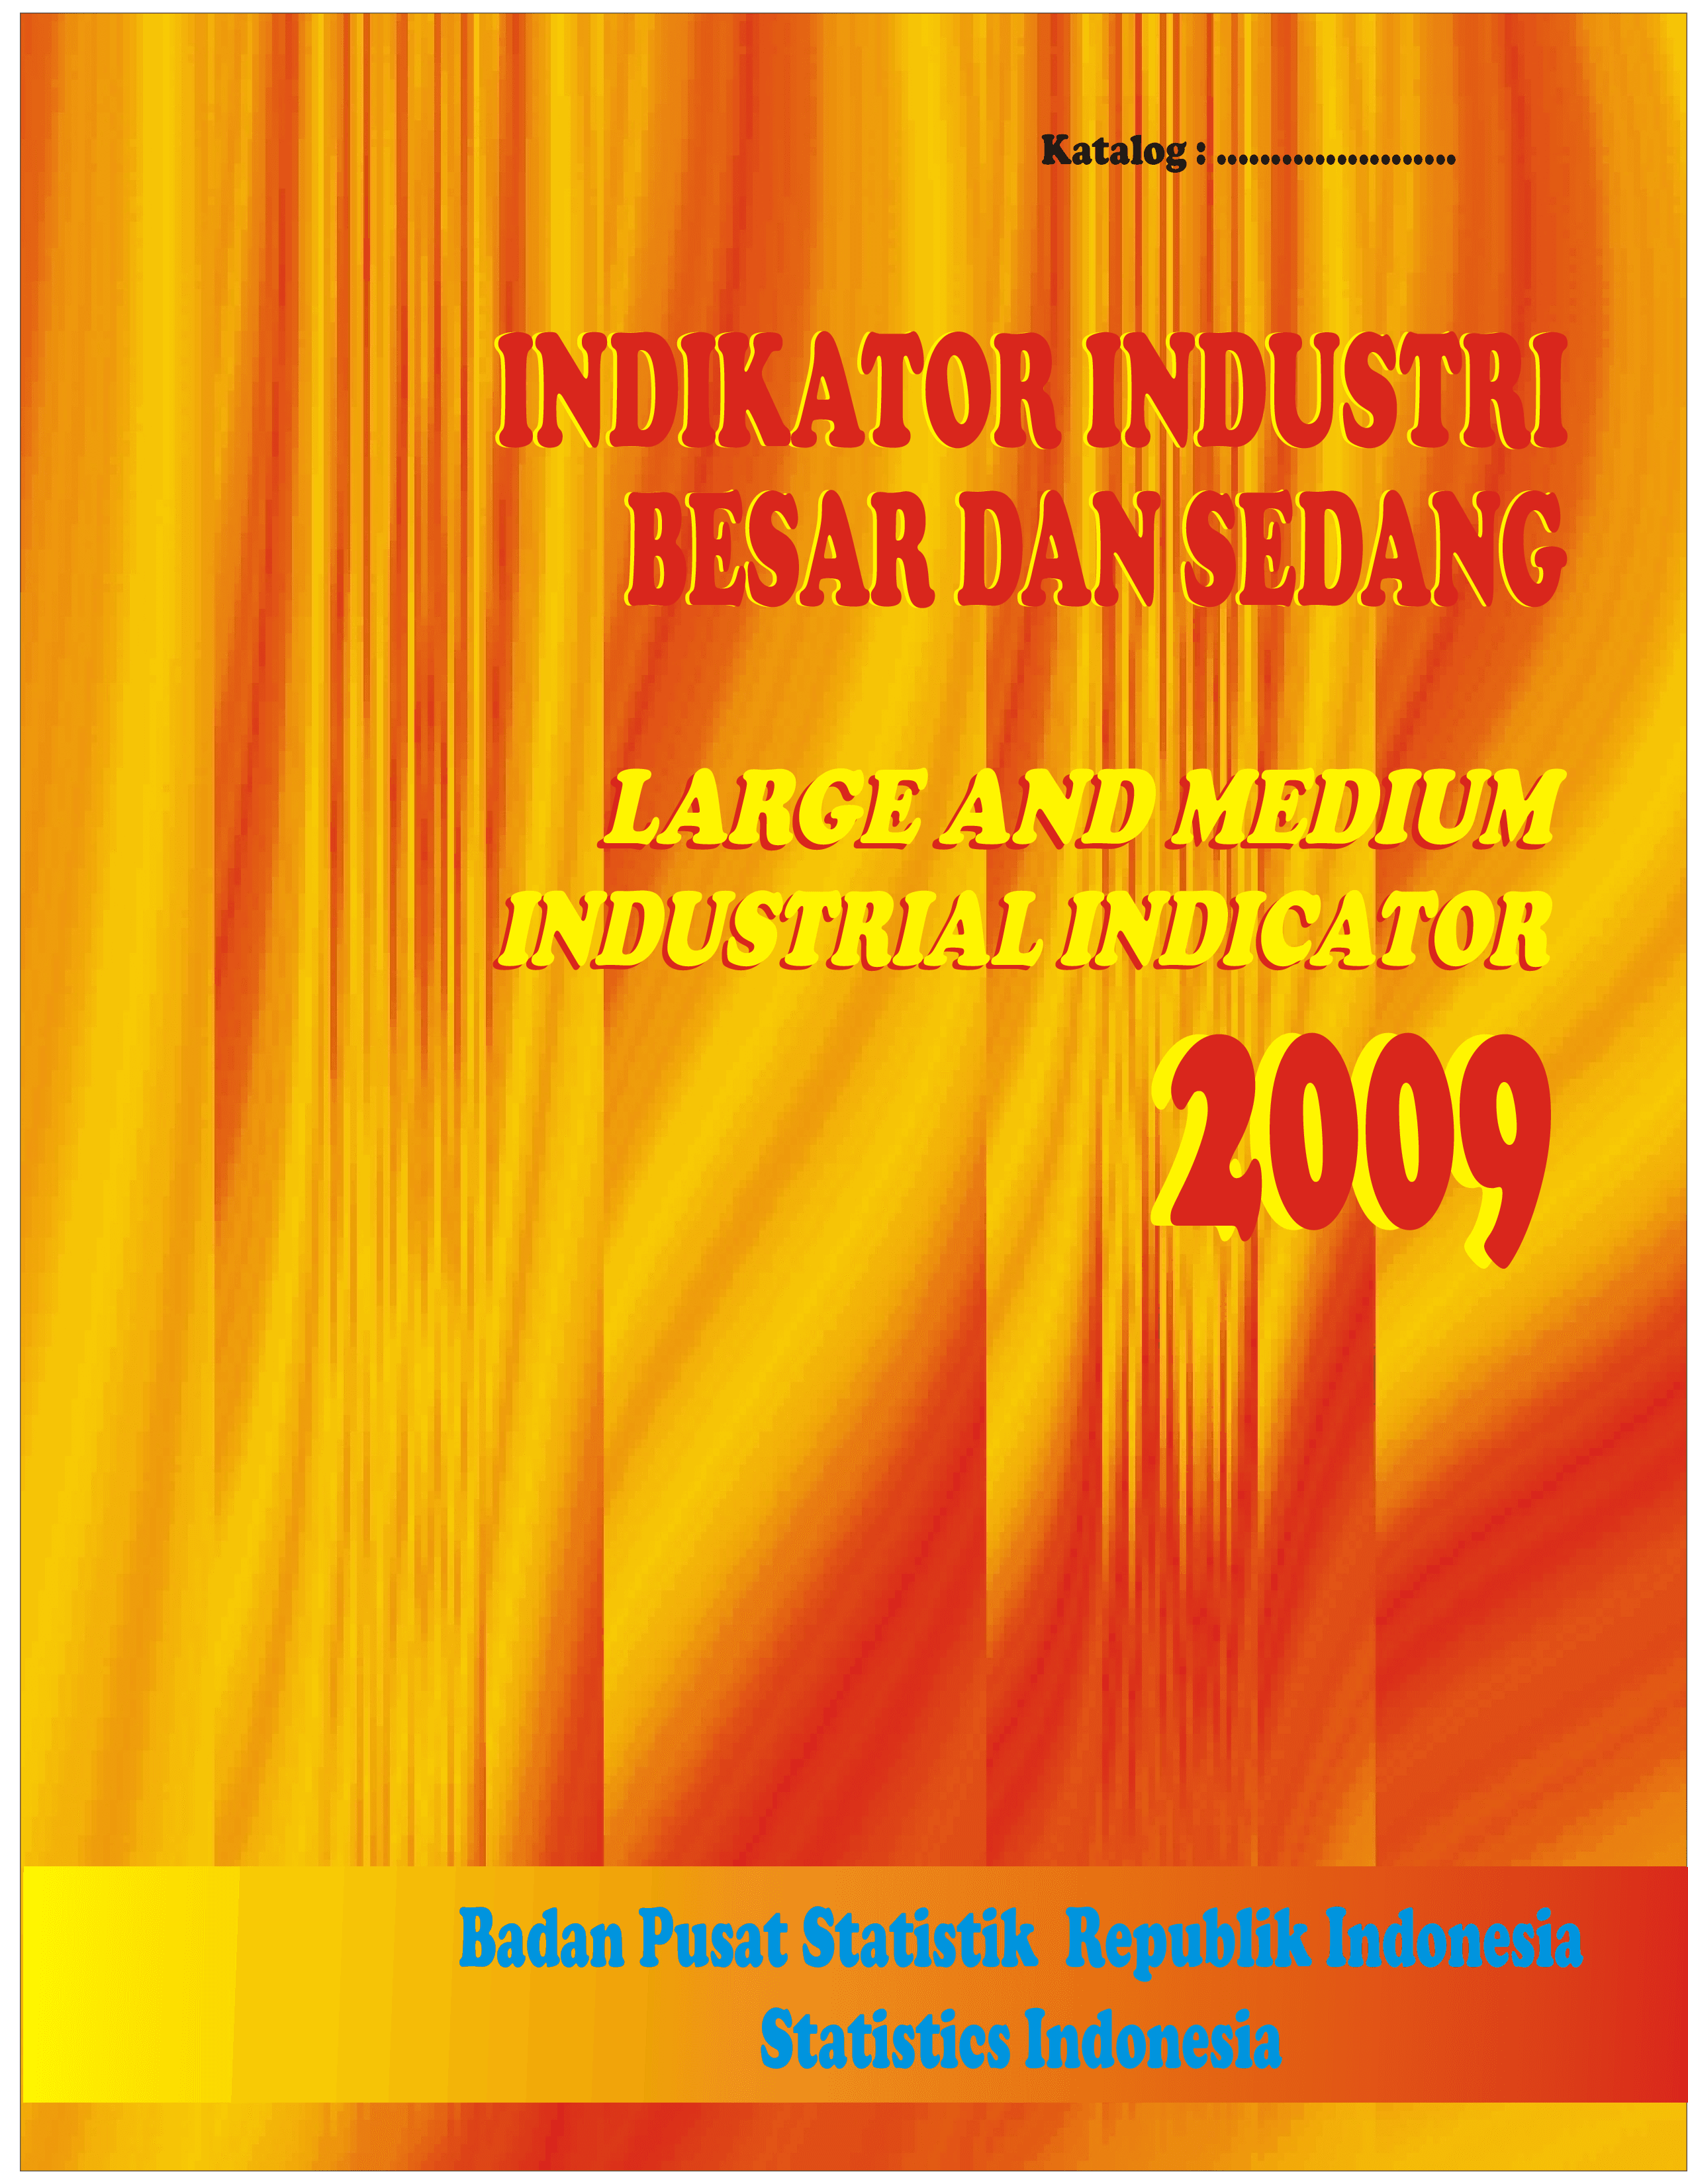 Manufacturing Industry Indicators-Large and Medium Indonesia 2009